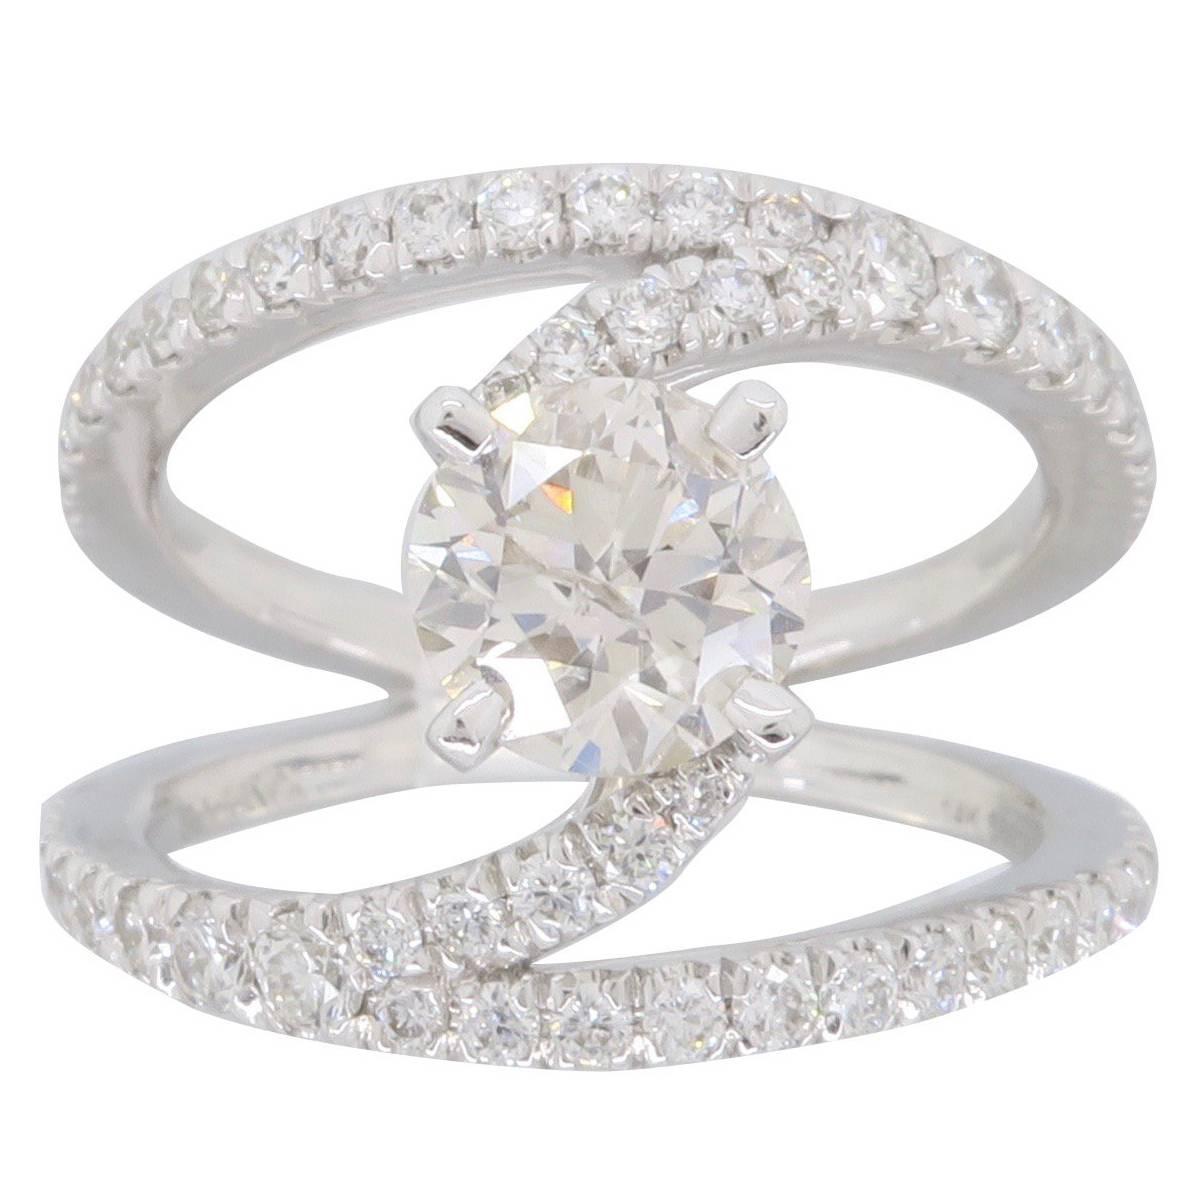 Gabriel & Co. Nova 1.75 Carat Diamond Engagement Ring